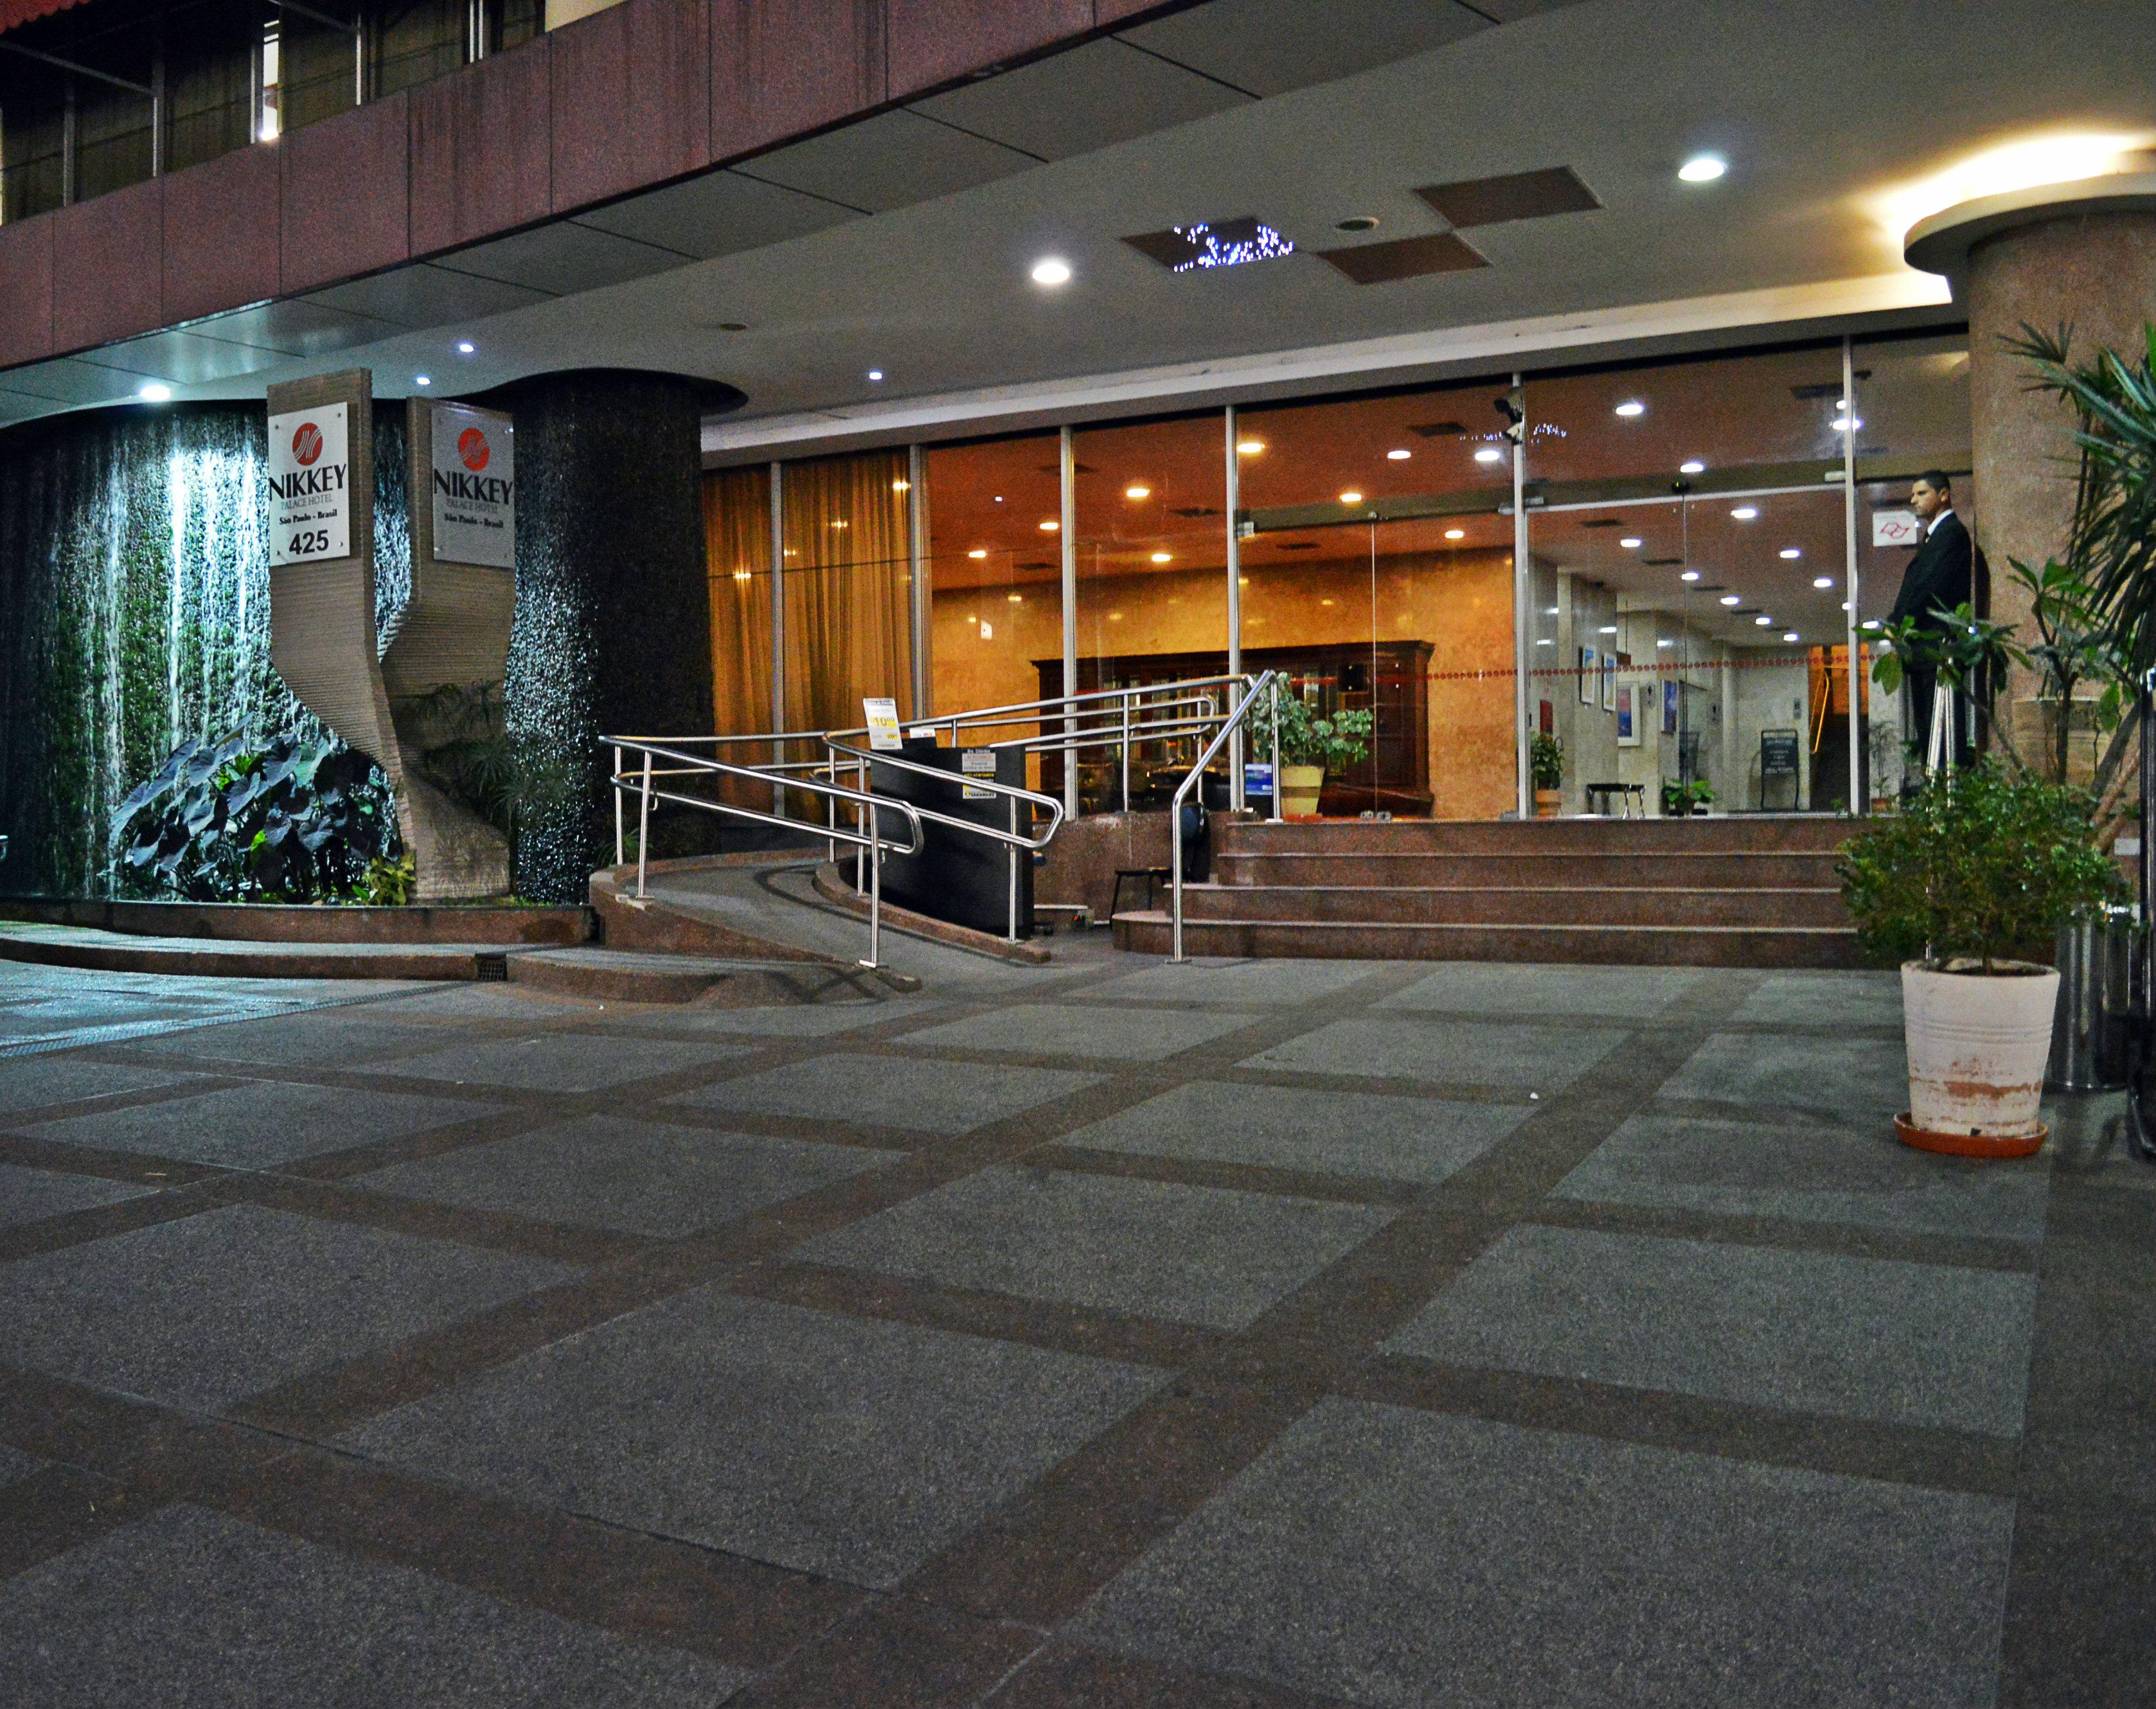 Nikkey Palace Hotel Sao Paulo Bagian luar foto